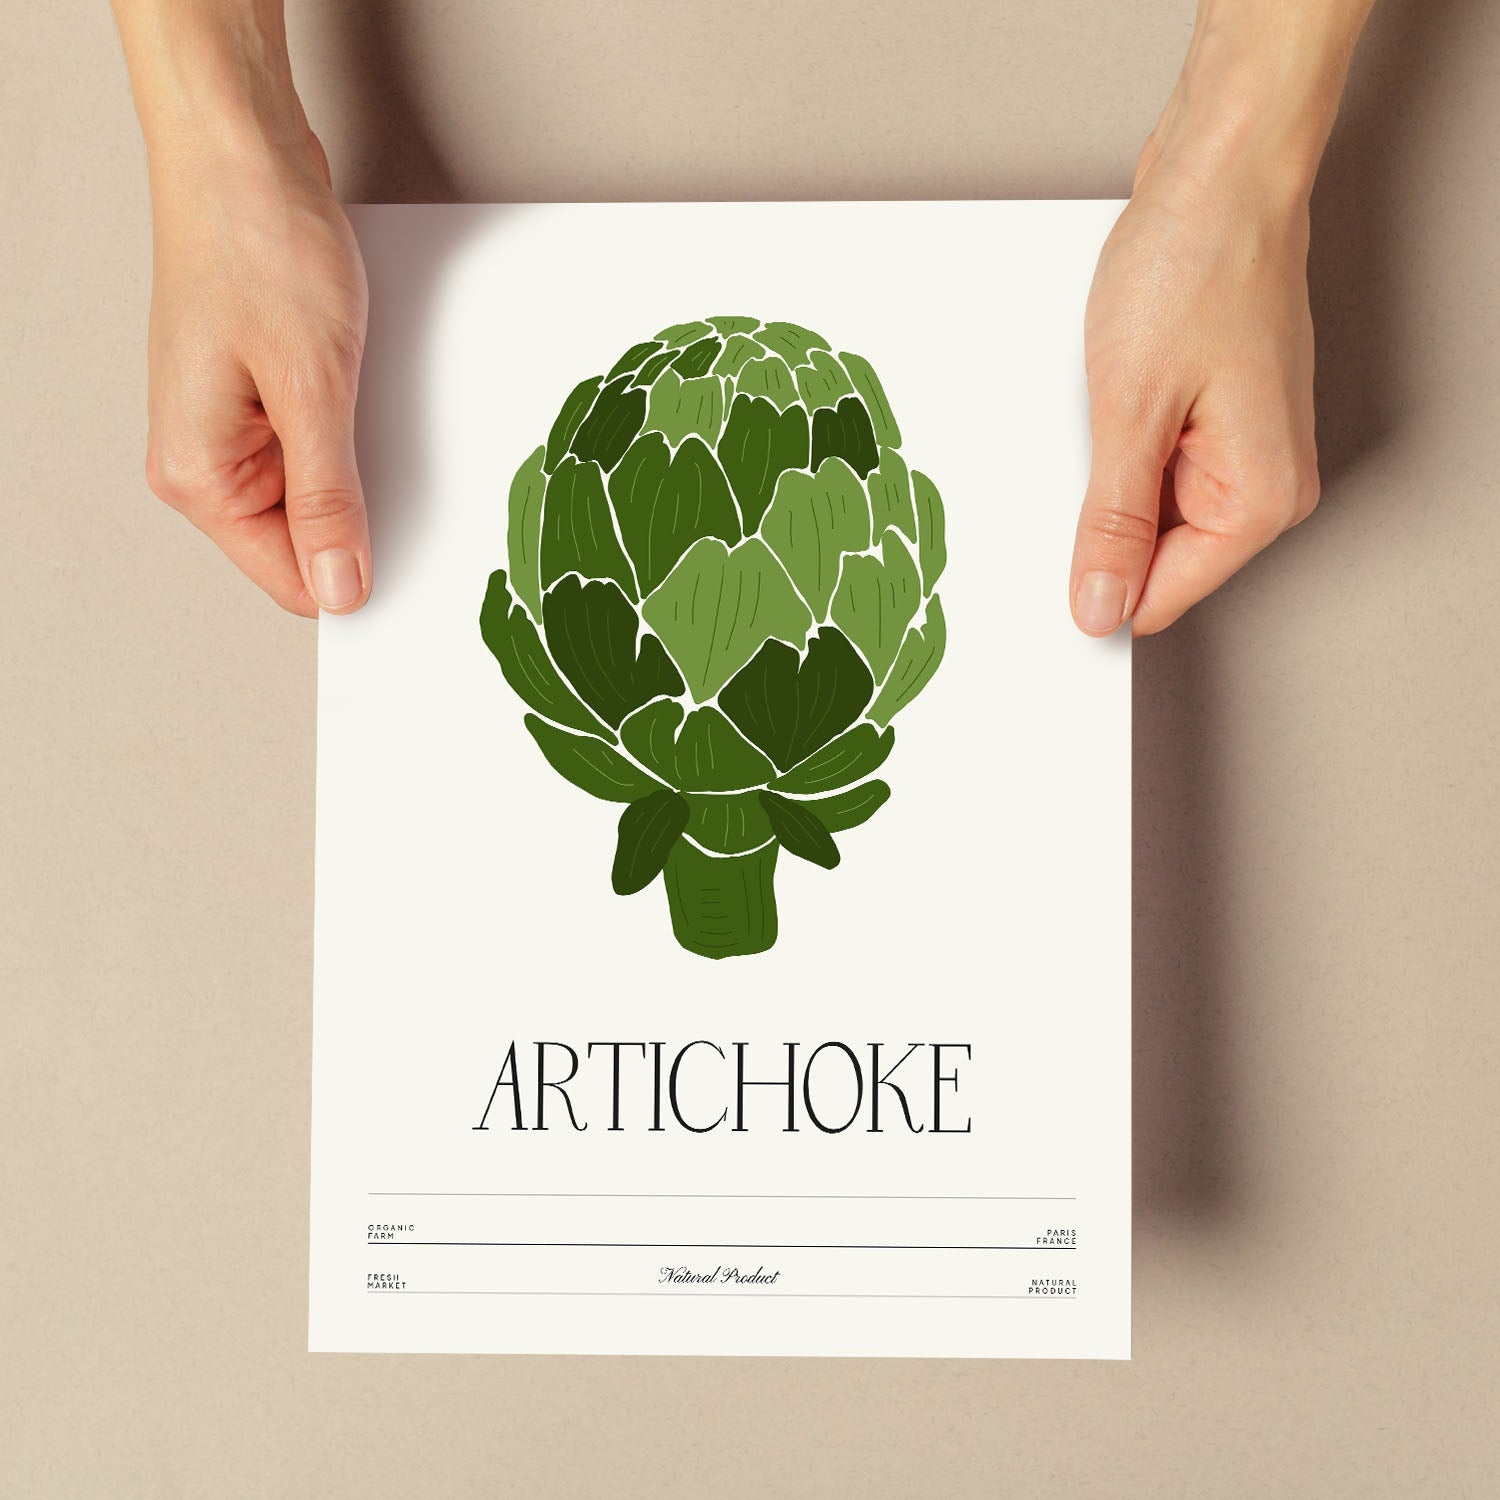 Artichoke-Artwork-Nacnic-Nacnic Estudio SL